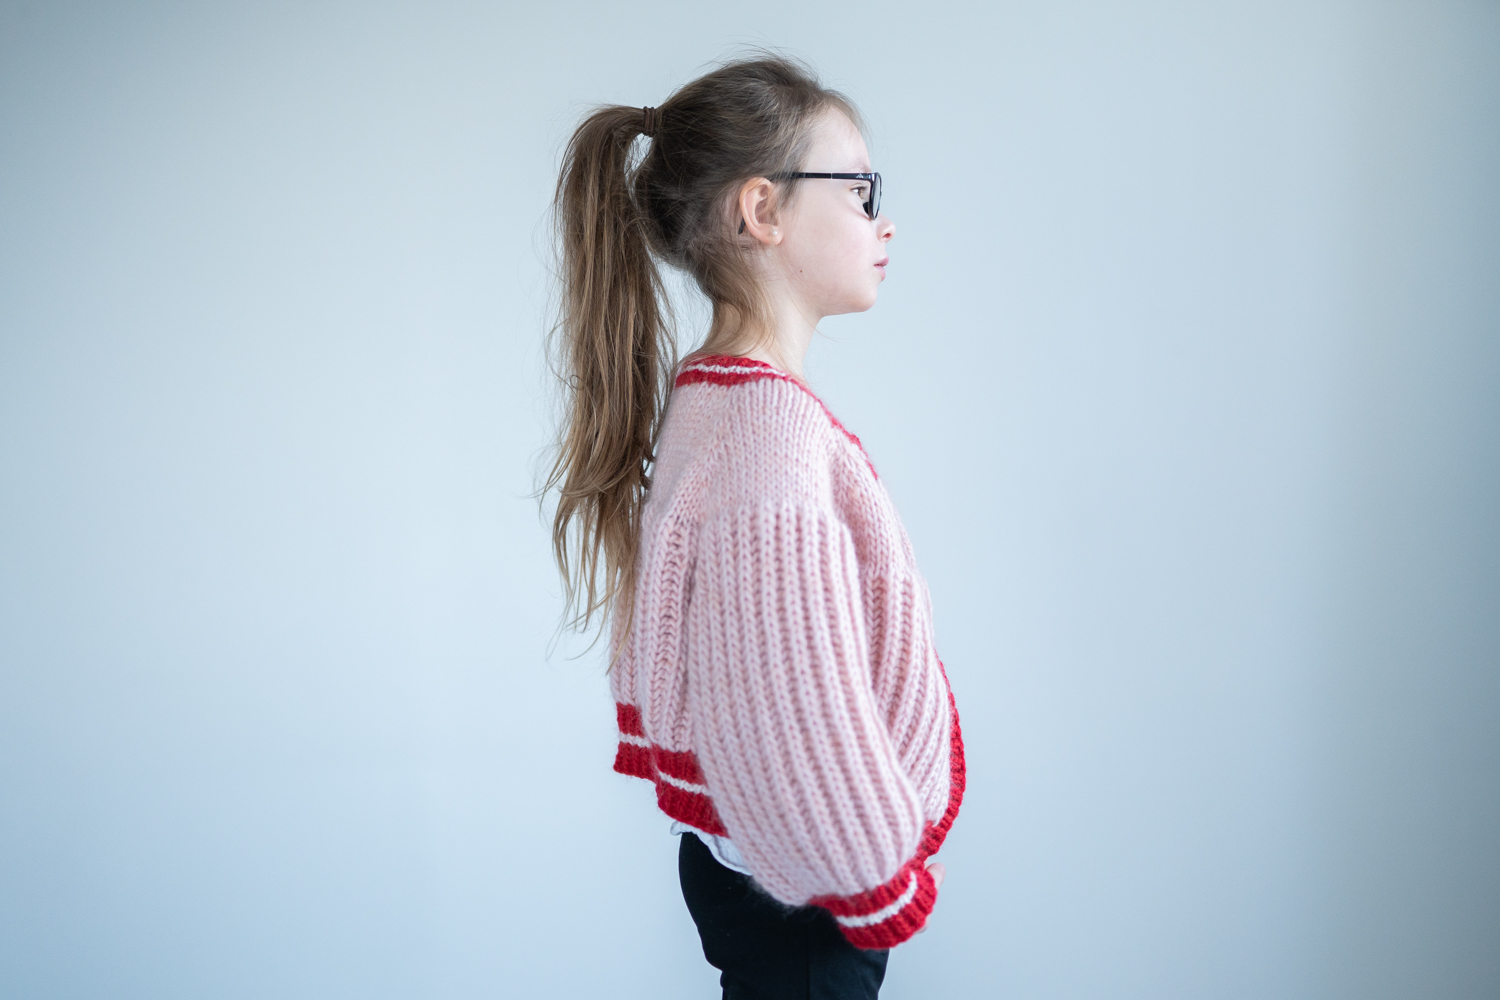  - Groove jacket | Knitting pattern kids jacket - by HipKnitShop - 16/01/2019